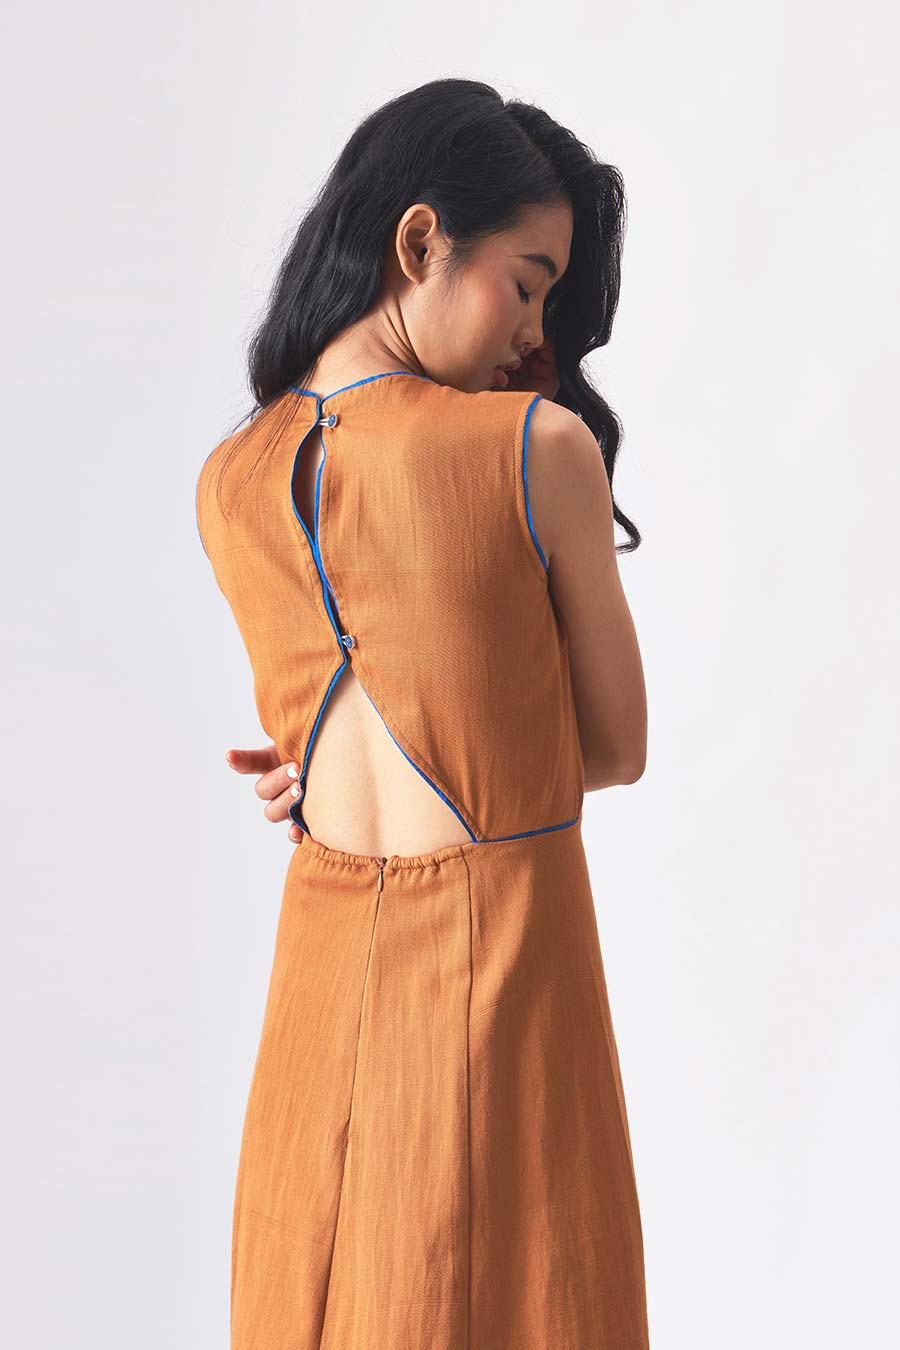 DELANEY - Handloom Denim A-Line Dress